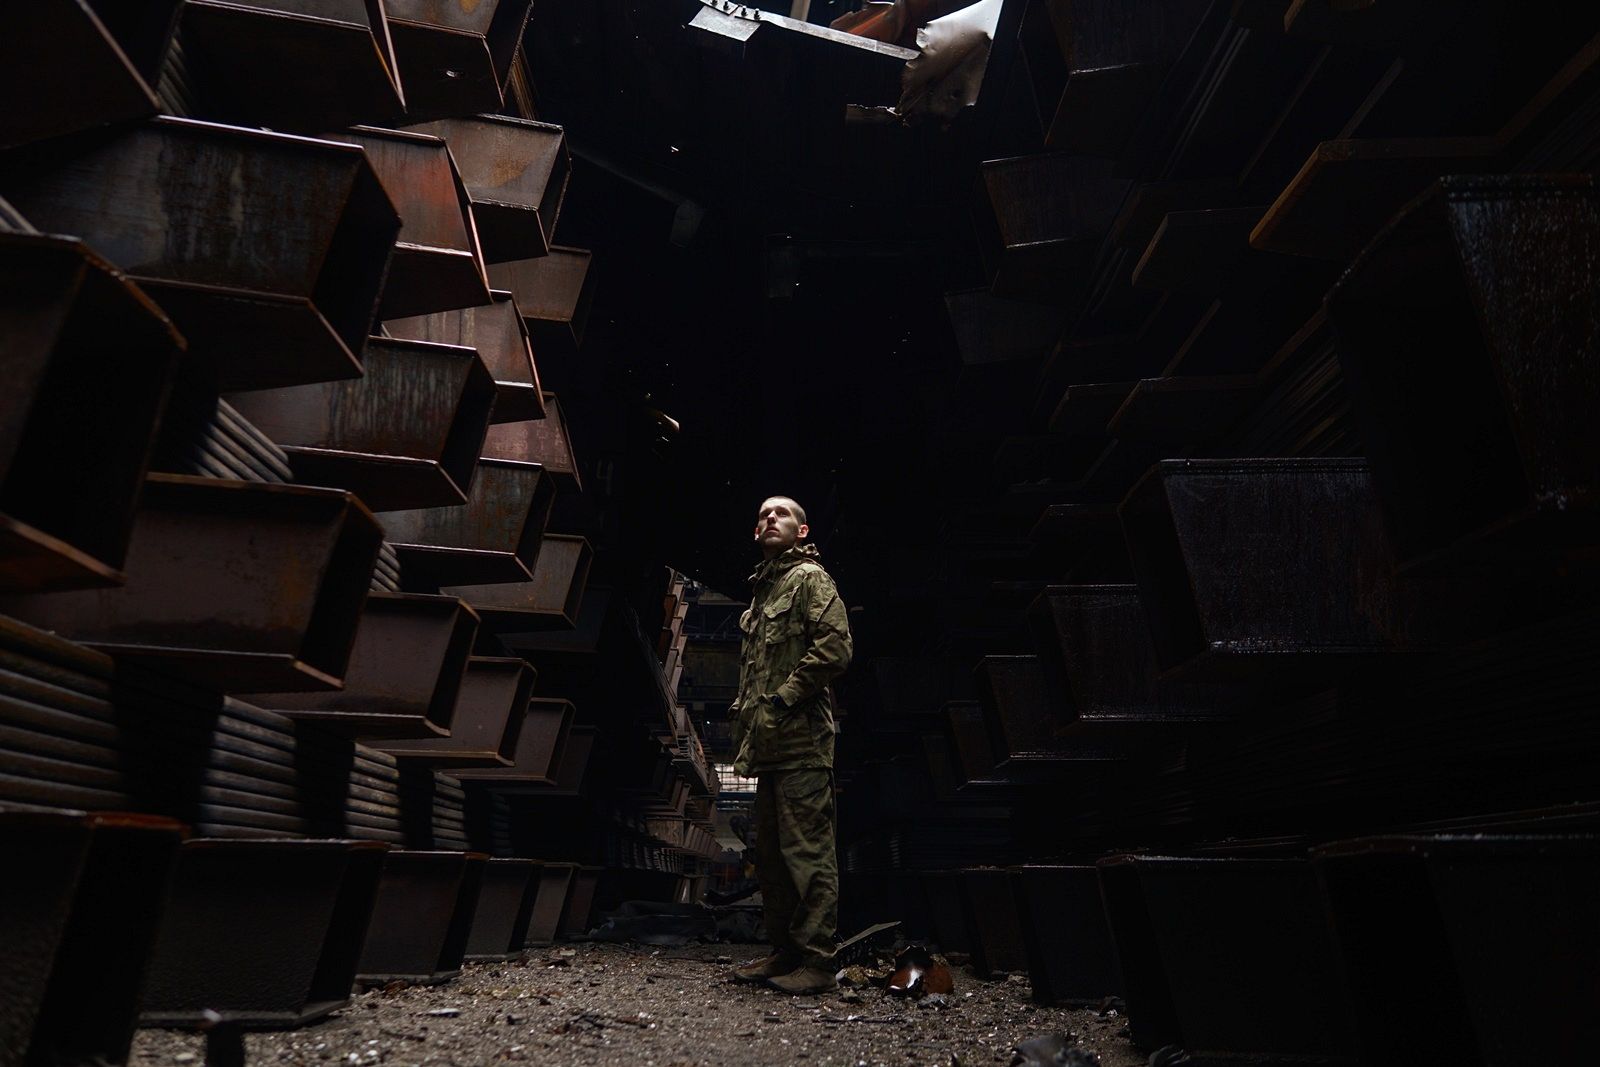 The pictures taken by Kozatskyi depict the Ukrainian resistance inside the Azovstal steel plant.